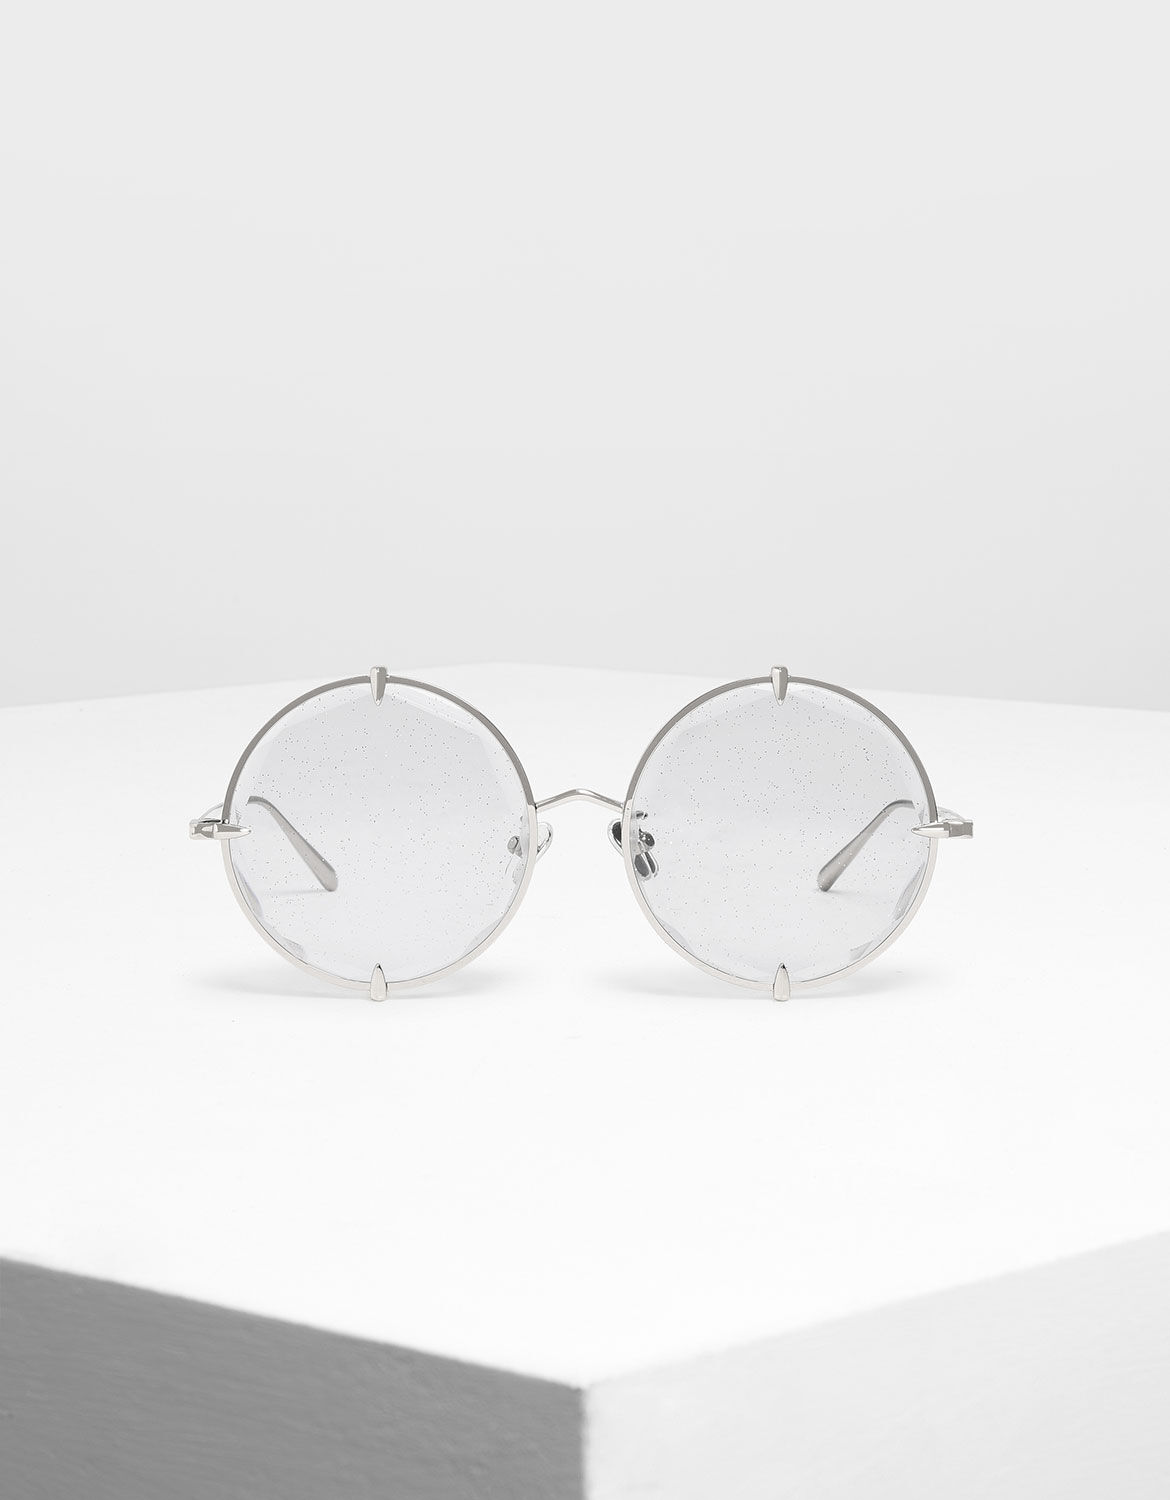 round wireframe glasses